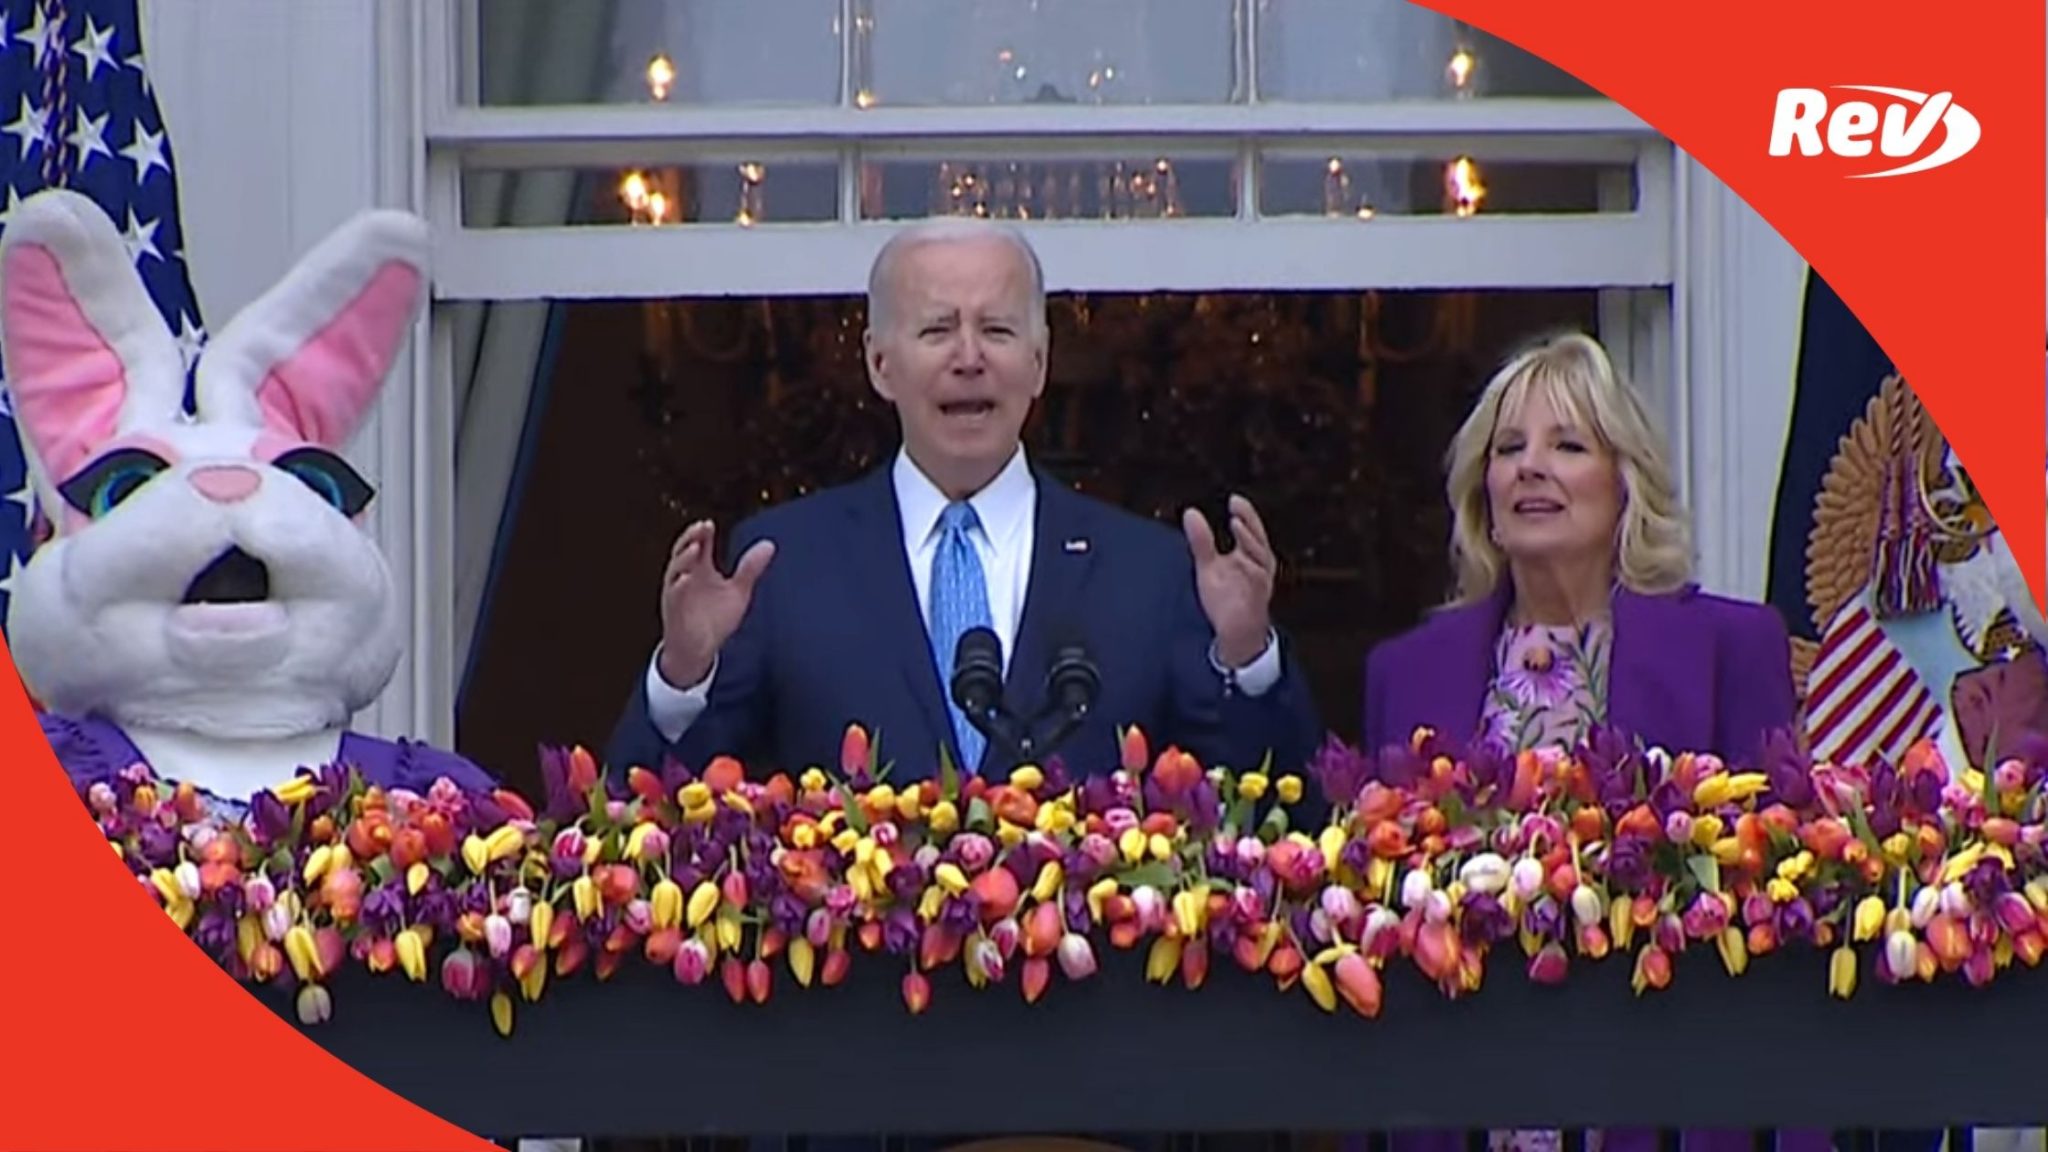 Biden delivers remarks at the 2022 White House Easter egg roll 4/18/22 Transcript